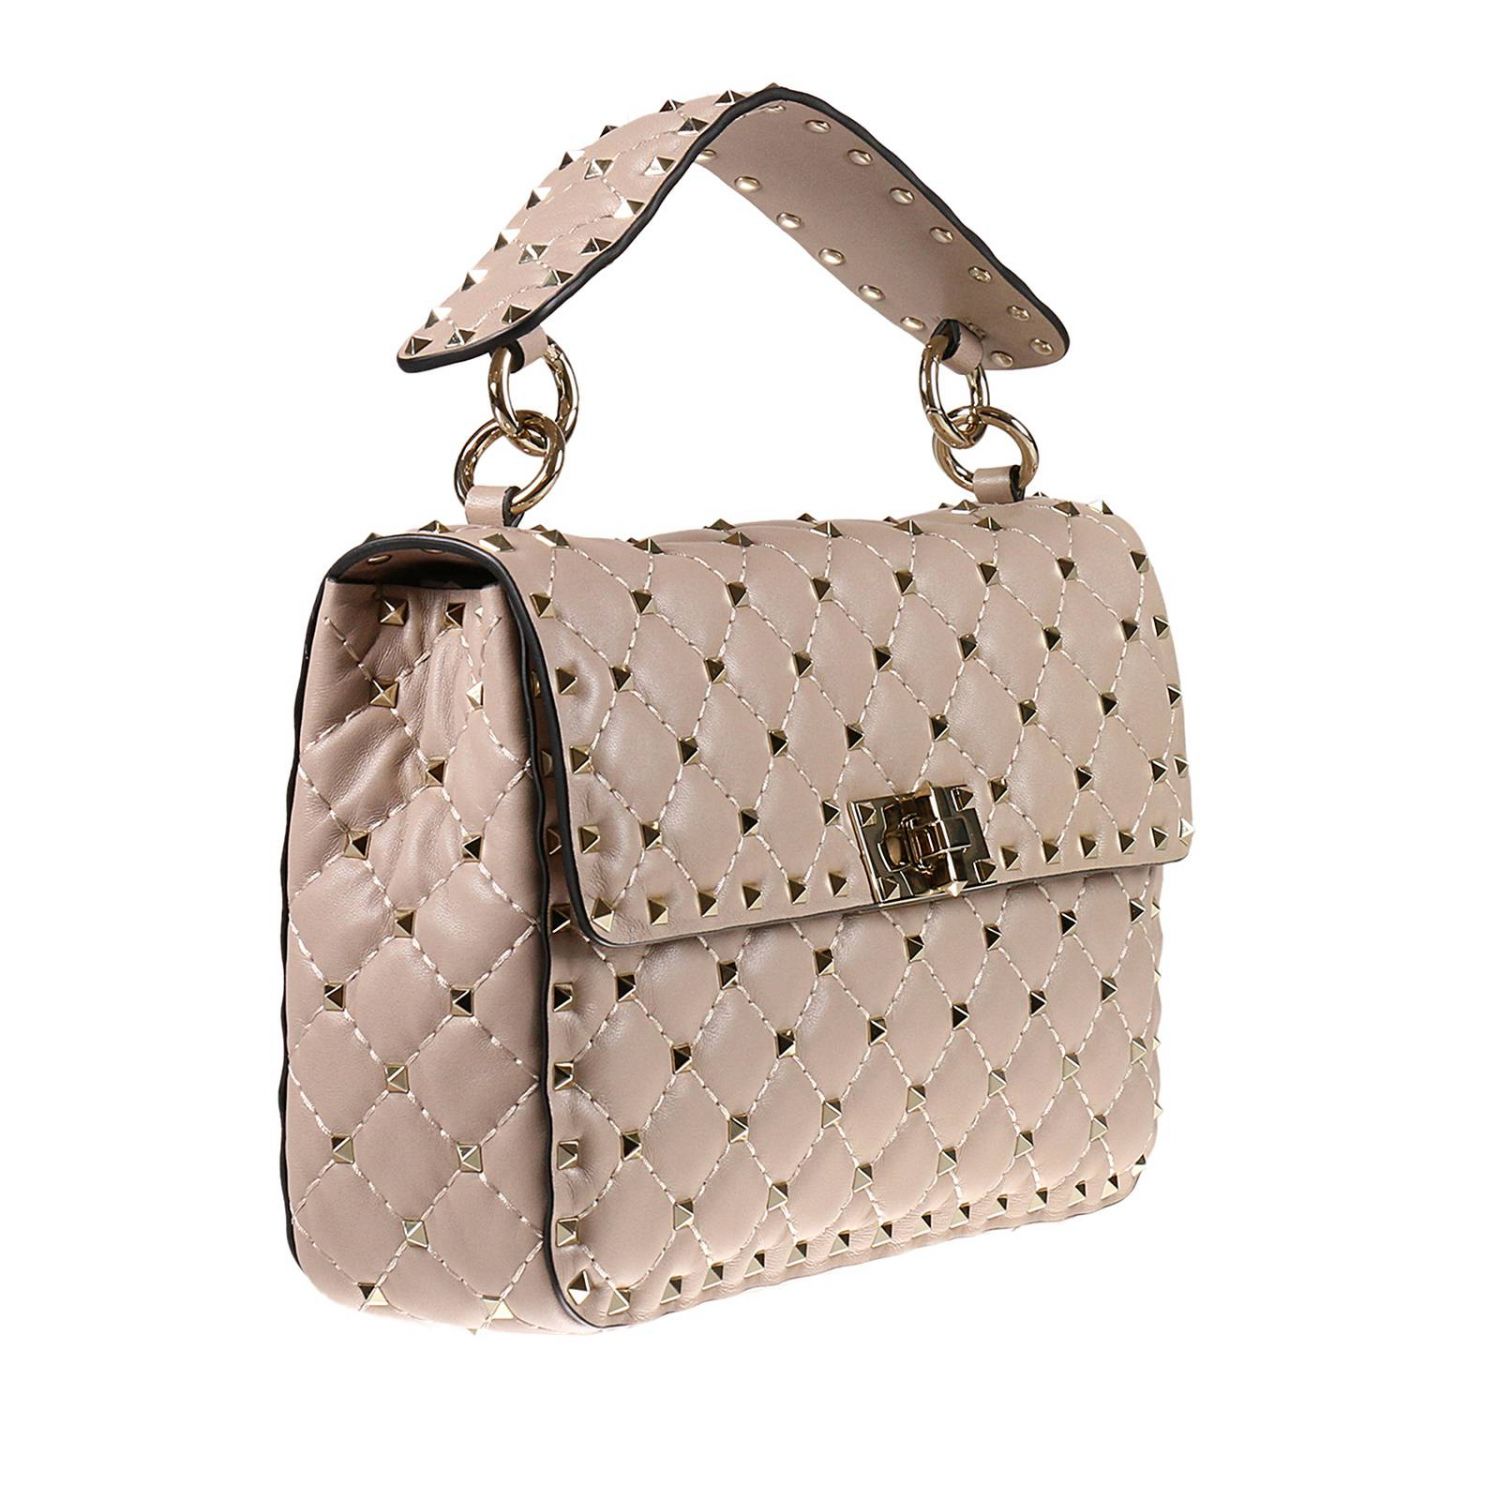 VALENTINO GARAVANI: Rockstud Spike leather bag with micro studs ...